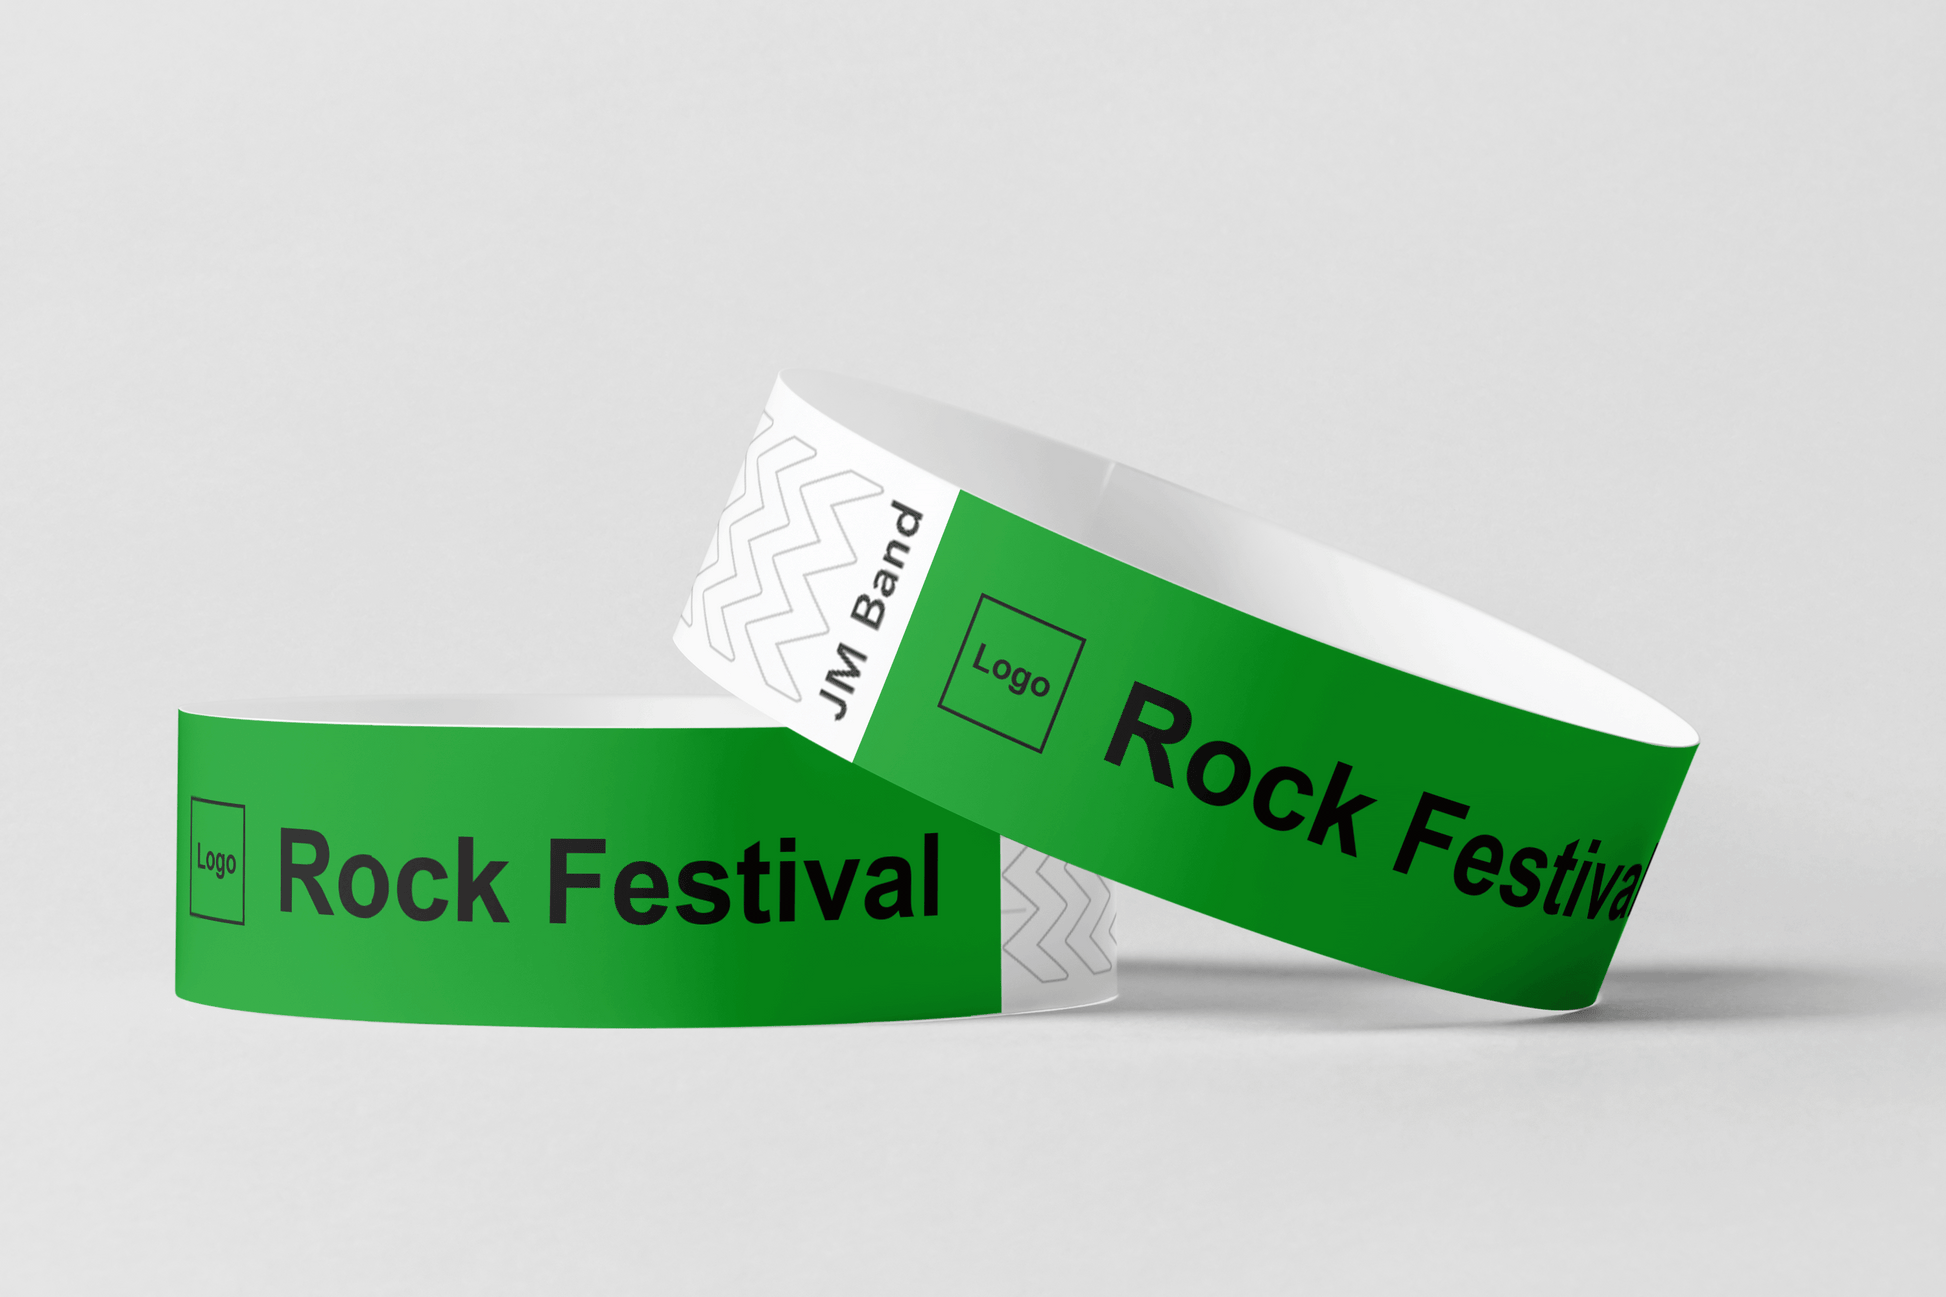 To armbånd med ordet rockefestival på, laget av JM Band NO Papirarmbånd med trykk Design selv og tyvek armbånd.